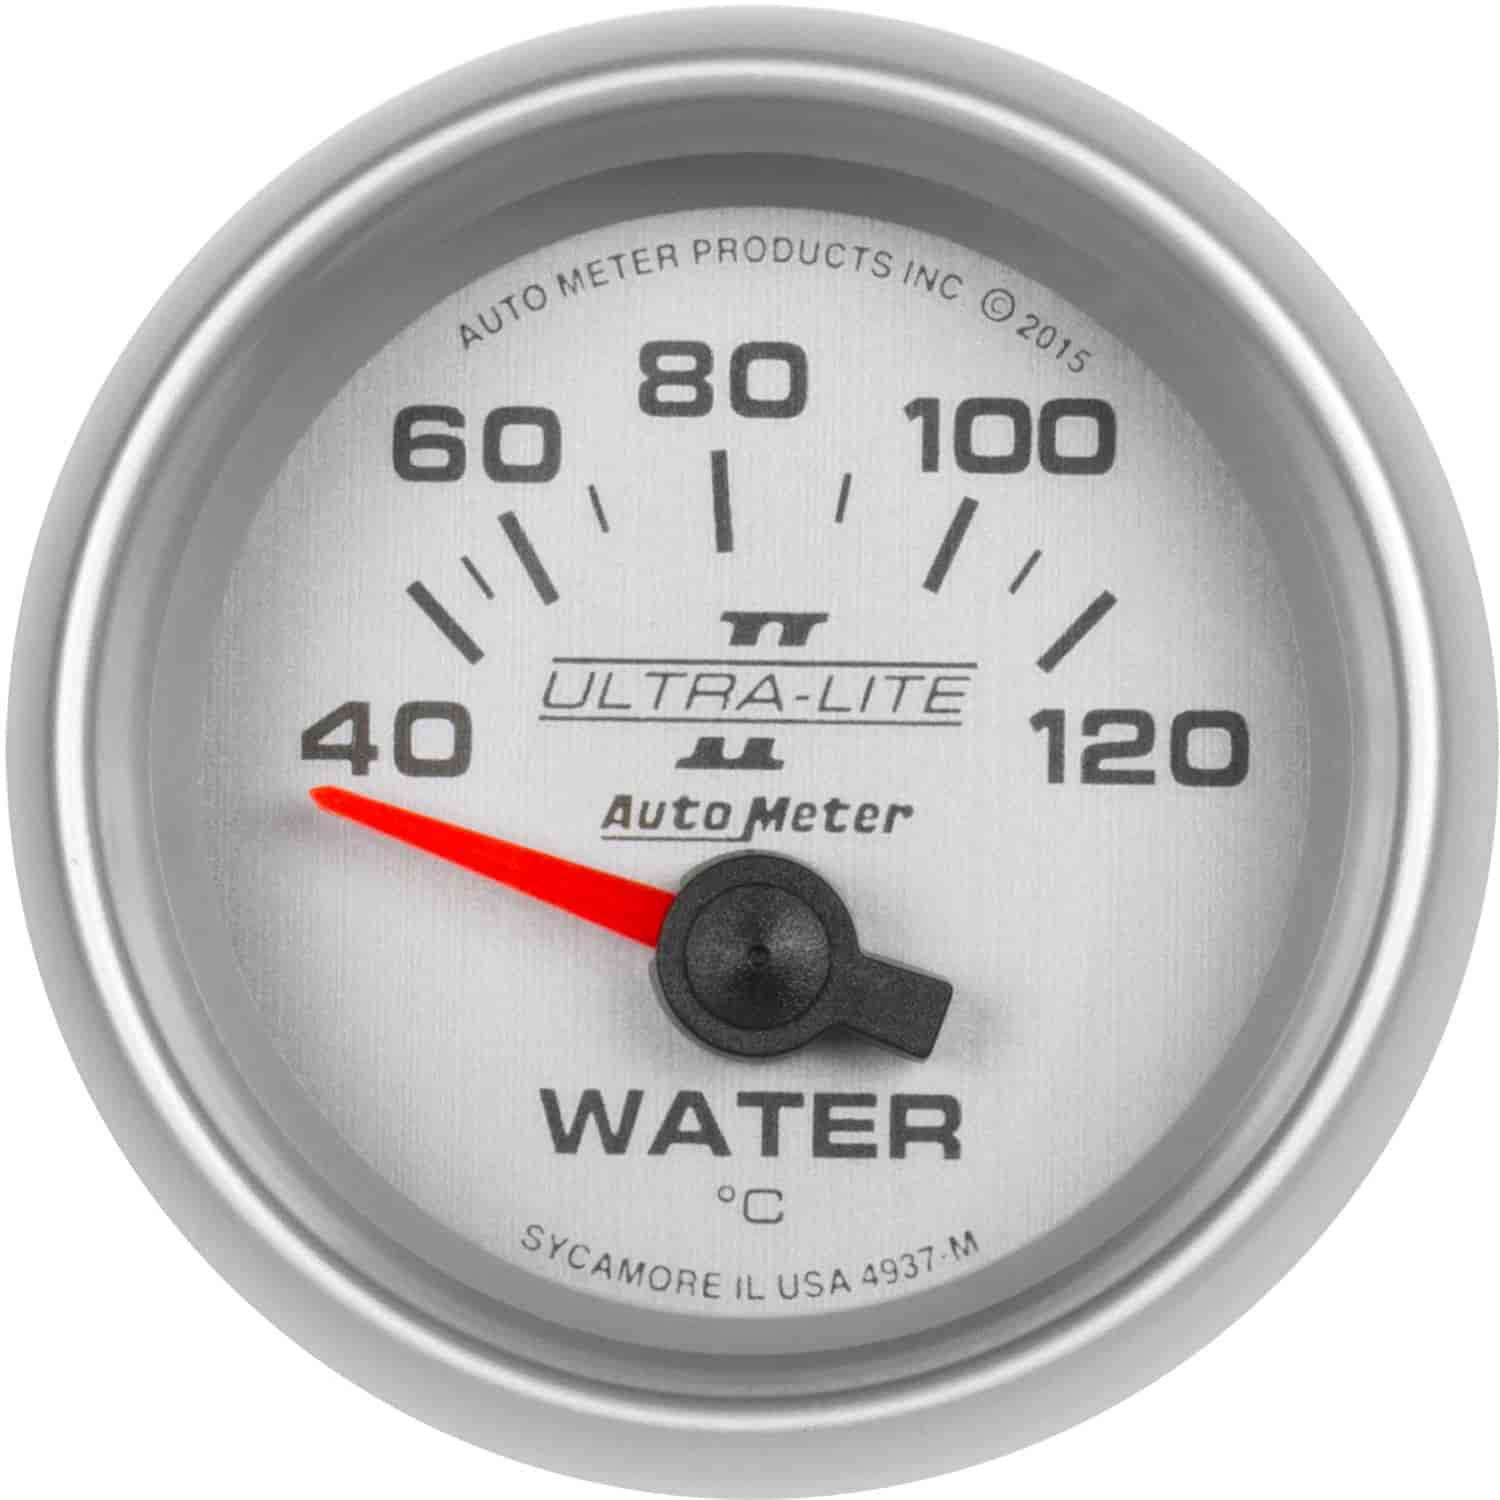 Ultra-Lite II Water Temperature Gauge 2-1/16" short sweep electrical